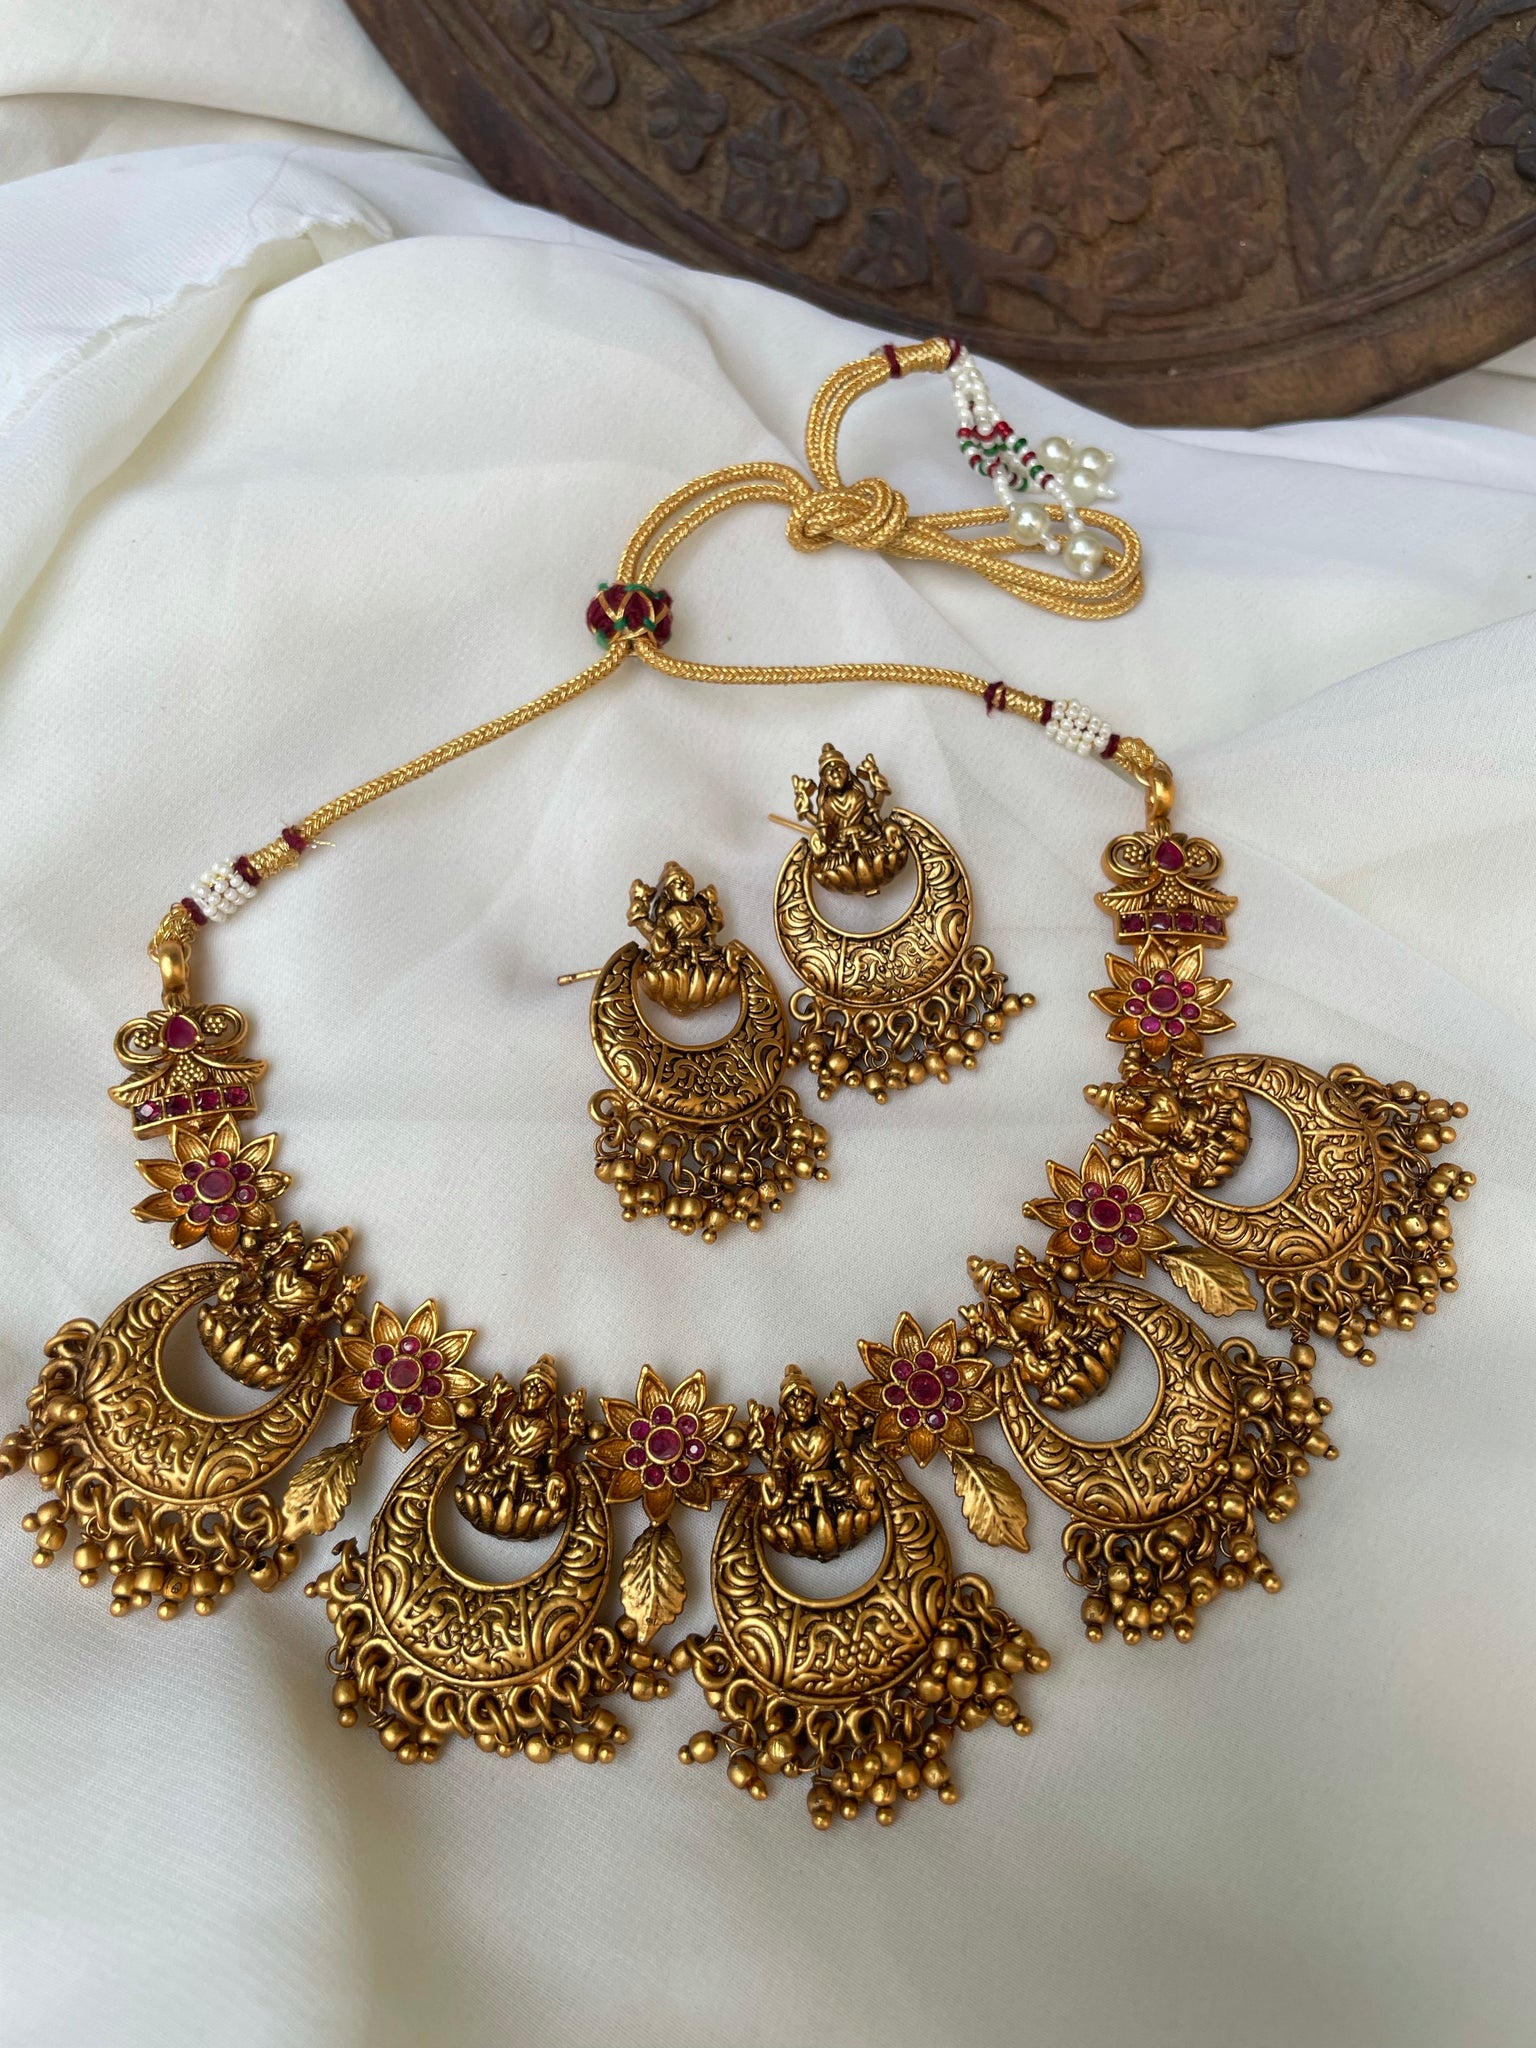 Lakshmi Chaandbalis necklace with earrings